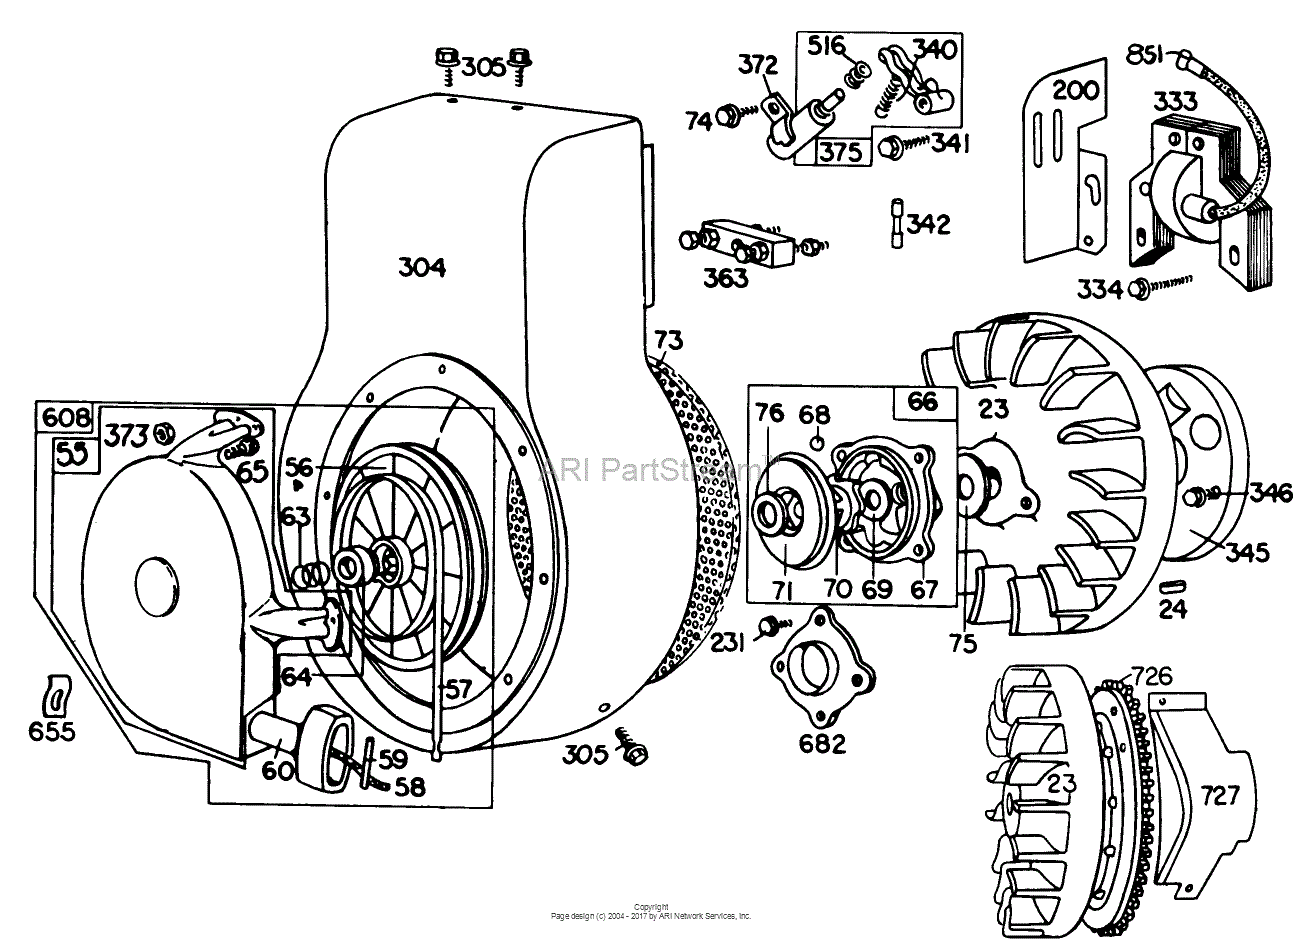 17.5 Hp Briggs And Stratton Engine Parts Diagram 1